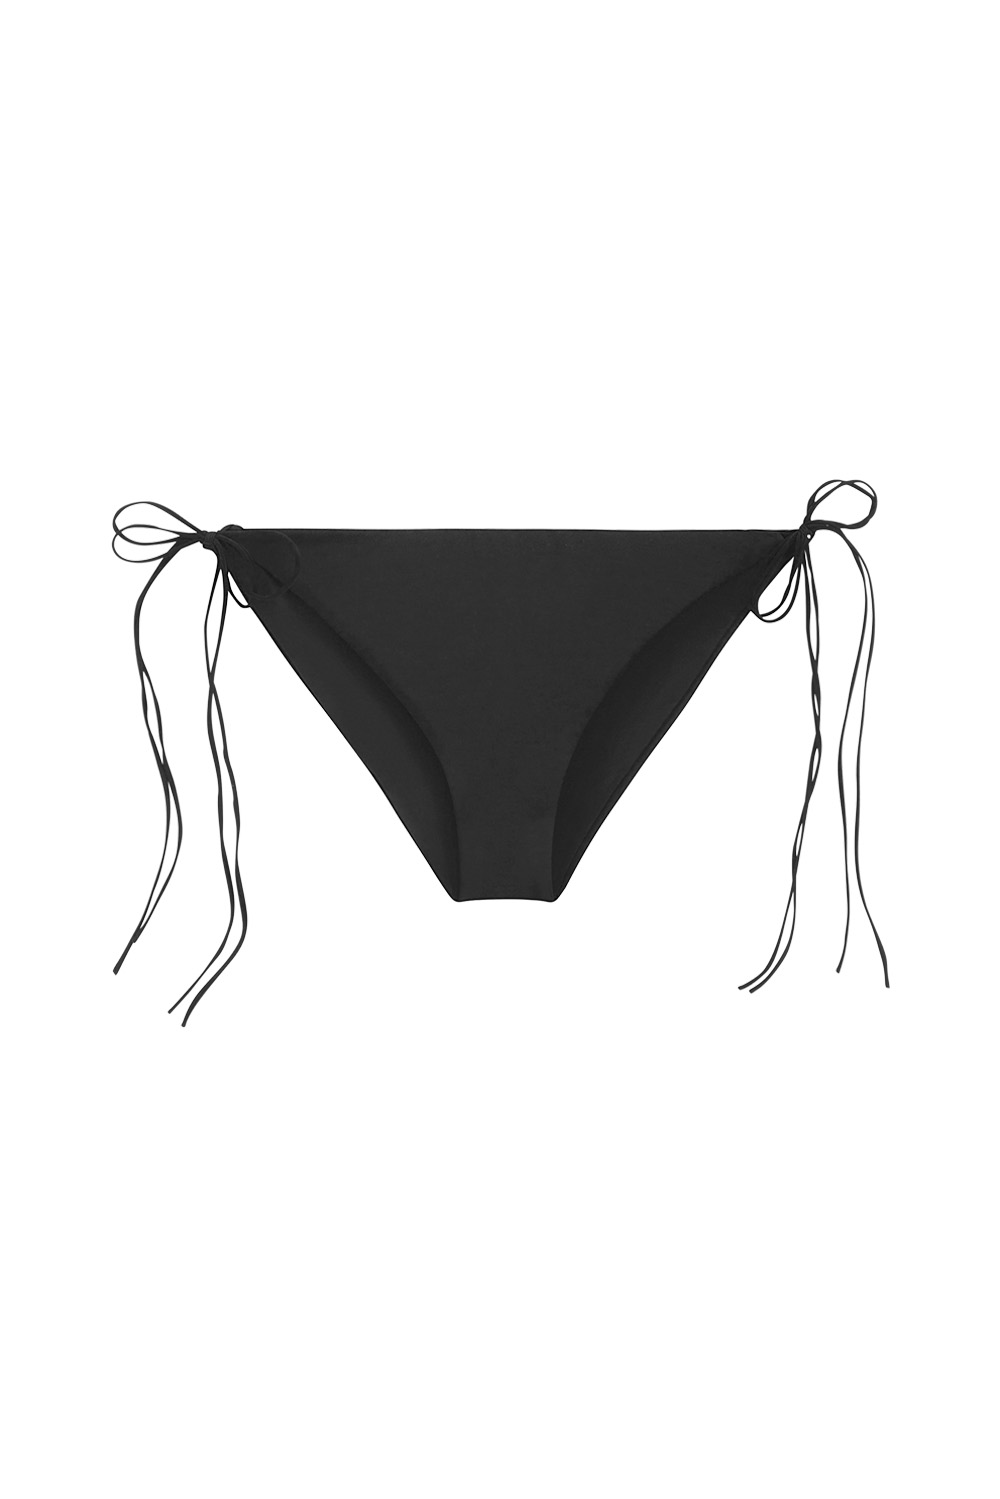 Sustainable Luxury Swimwear / Ropa de baño sostenible, eco bikini / bikini ecológico. Hermigua top in black, by NOW_THEN